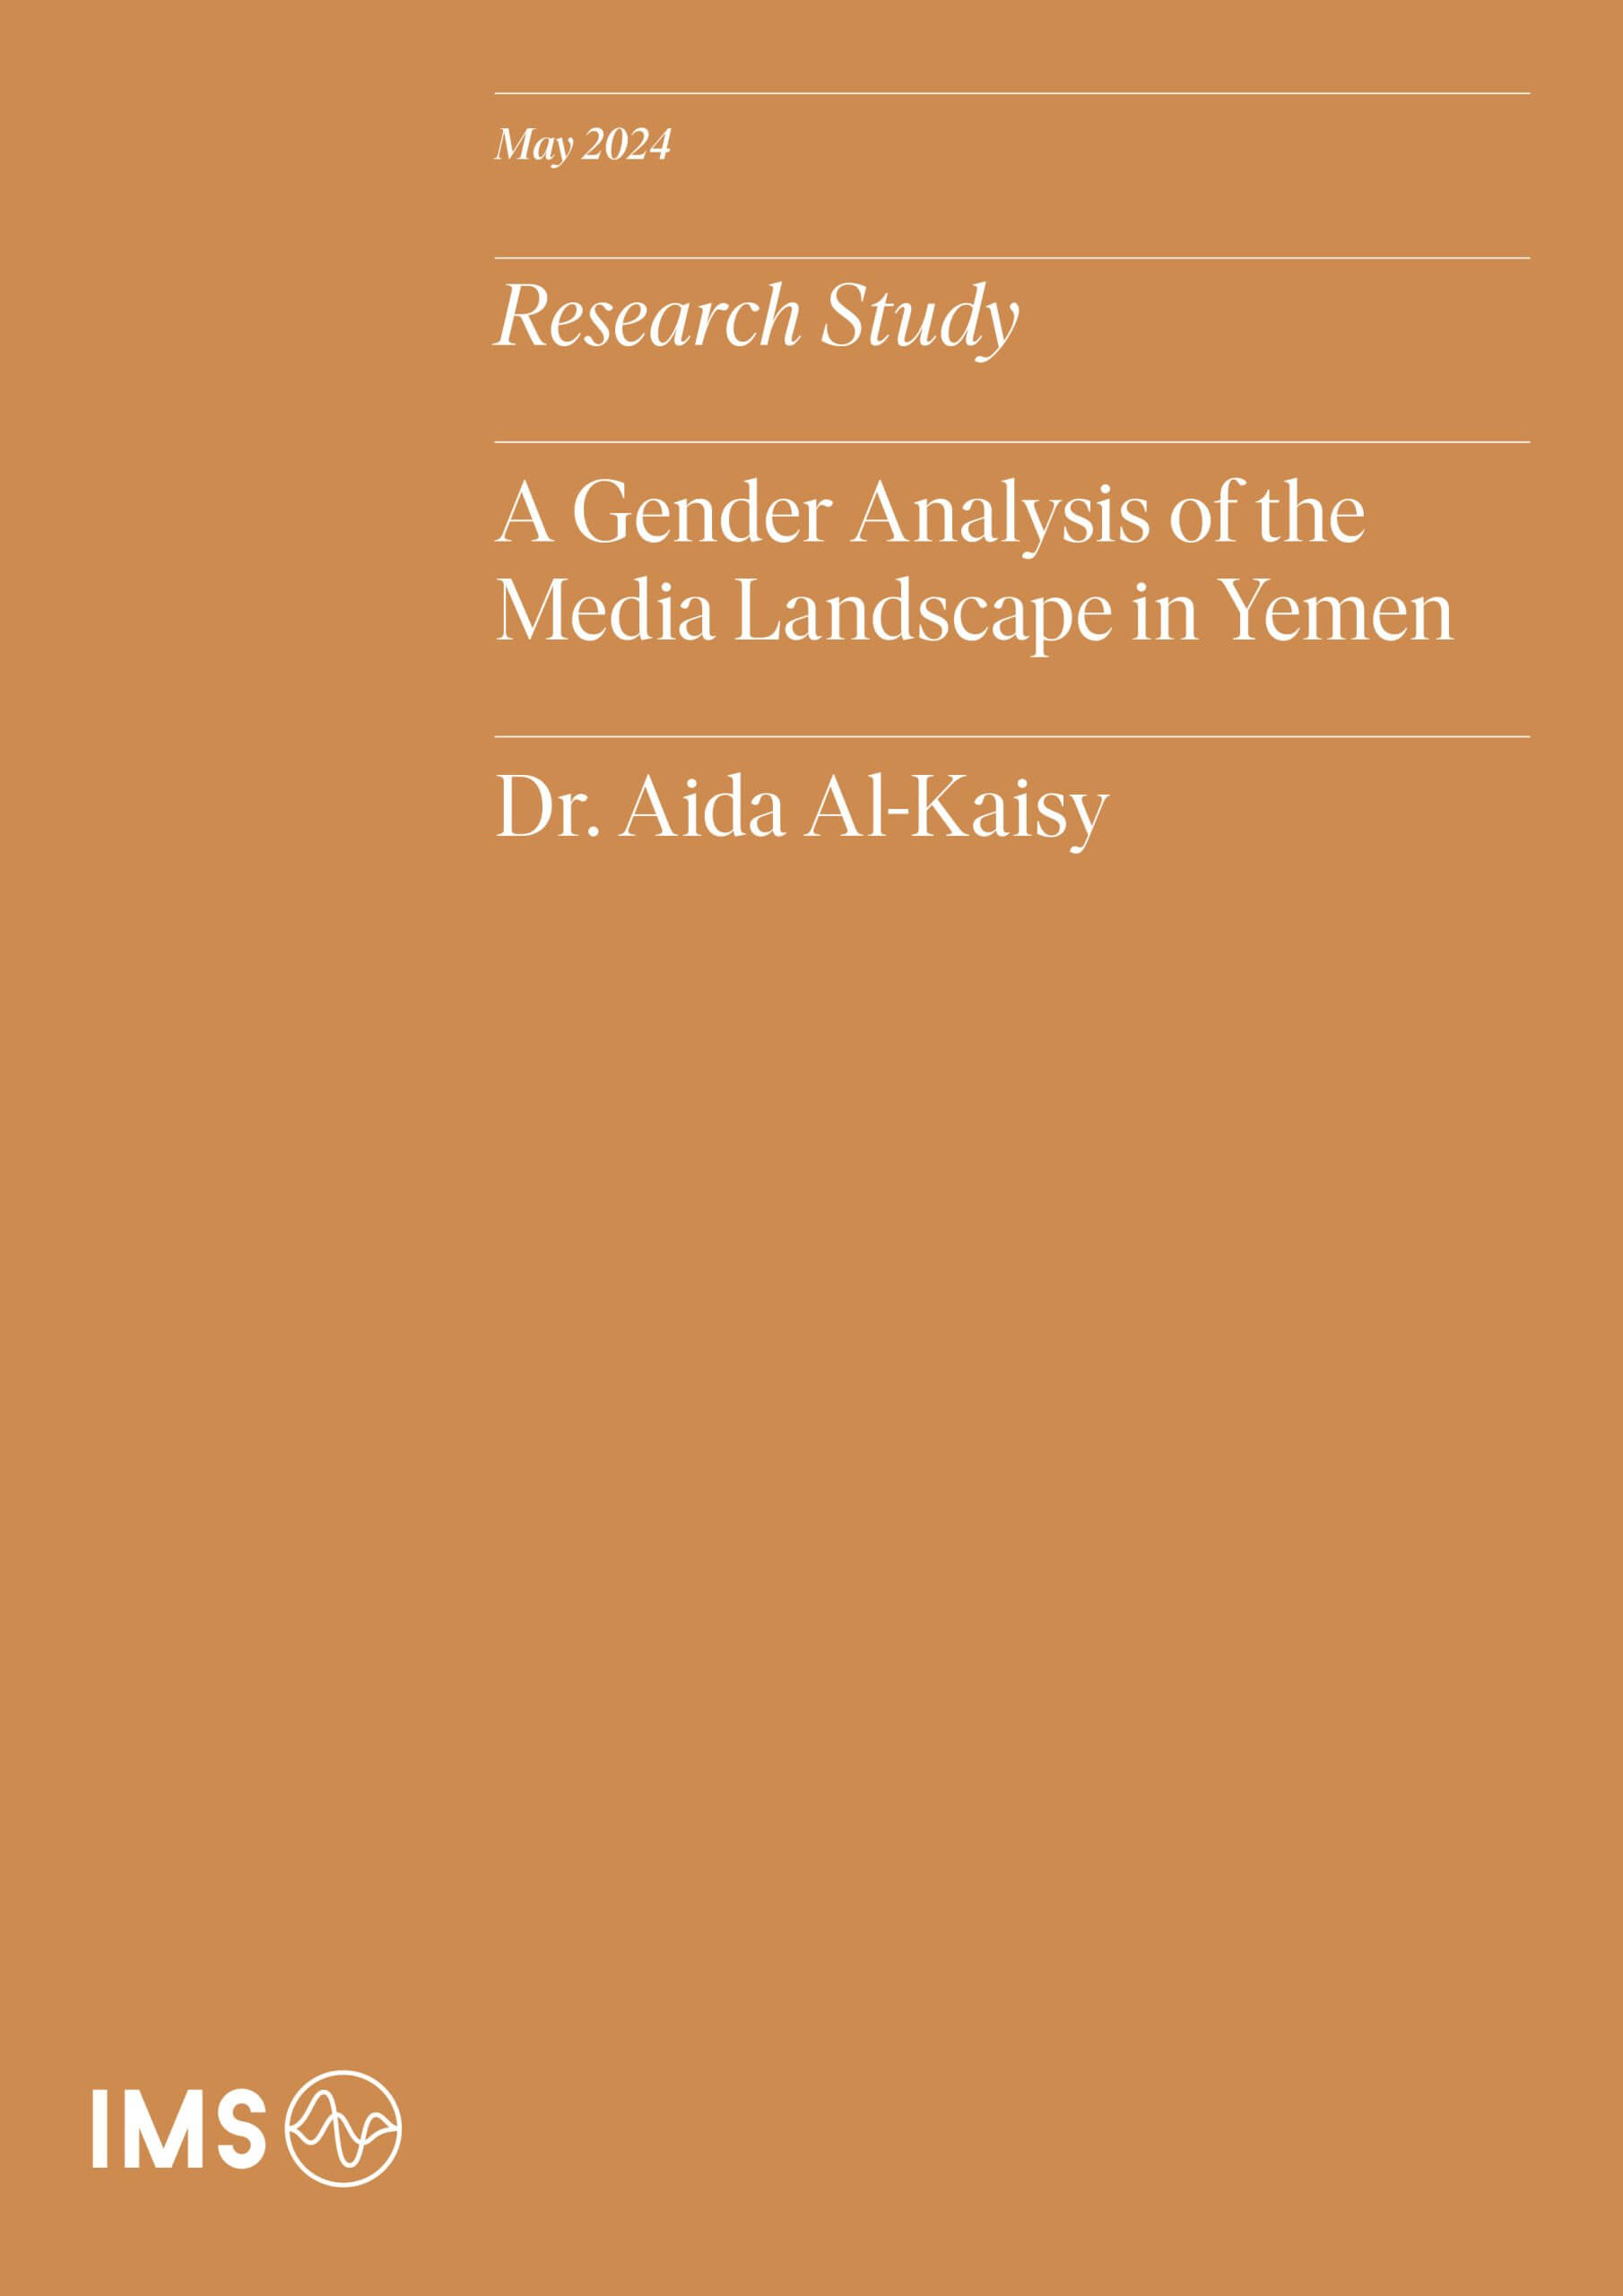 A Gender Analysis of the media landscape in Yemen